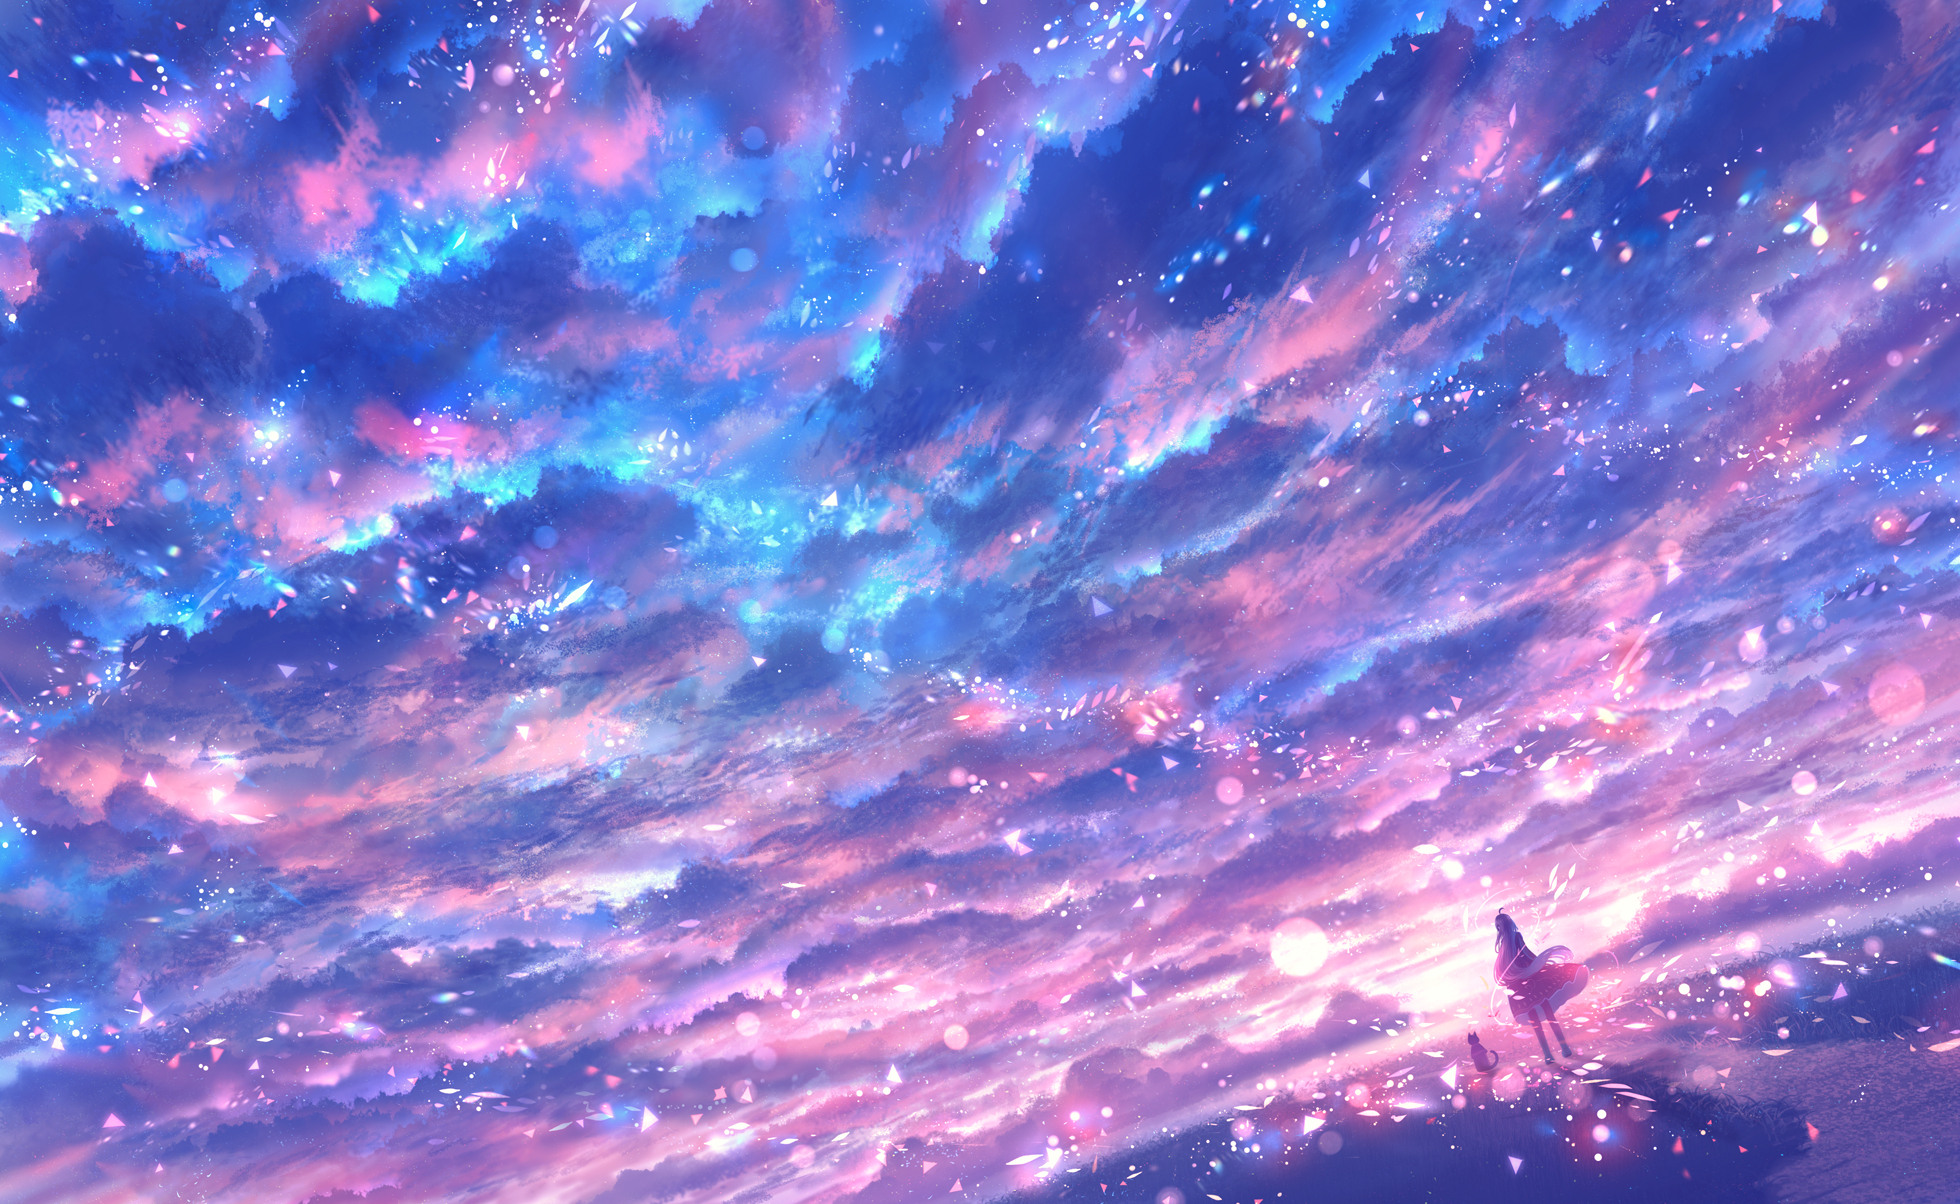 Anime #Original #Cloud #Girl #Reflection #Skirt #Sky Telephone Pole #Water  #1080P #wallpaper #hdwallpaper #des… | Anime scenery, Cloud wallpaper,  Scenery wallpaper